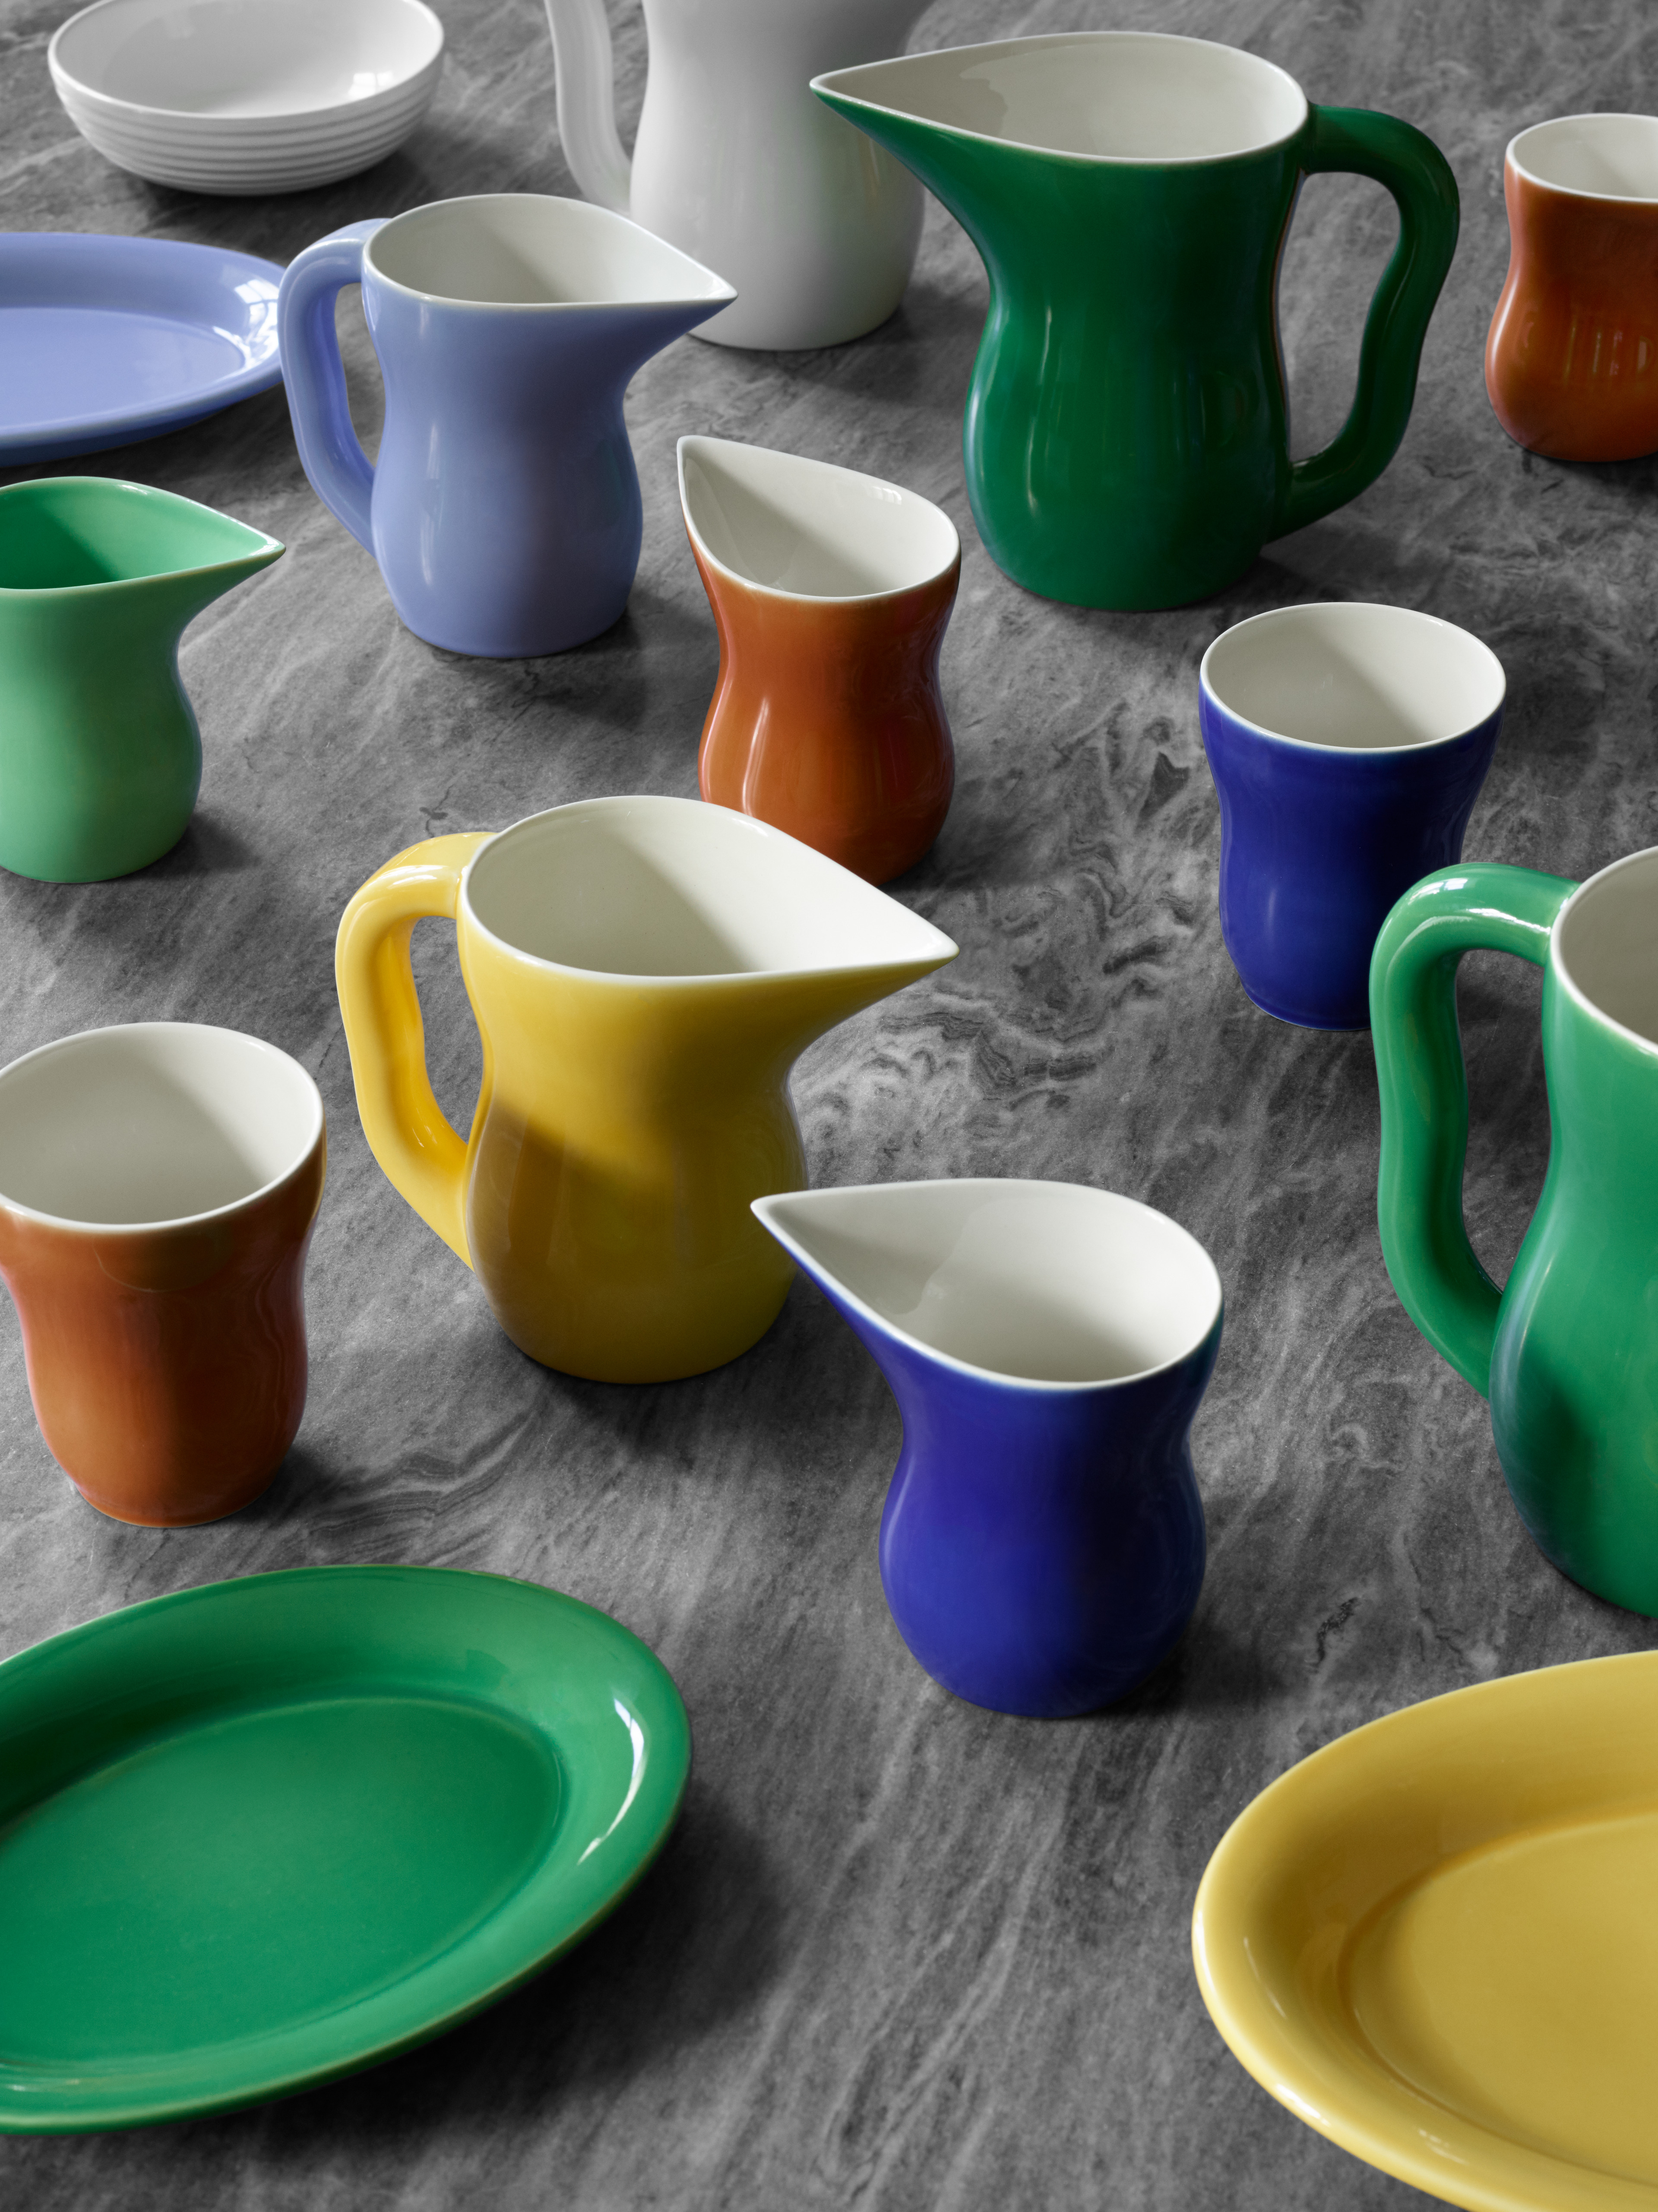 Jug, plates and mugs from the Kähler Ursula series